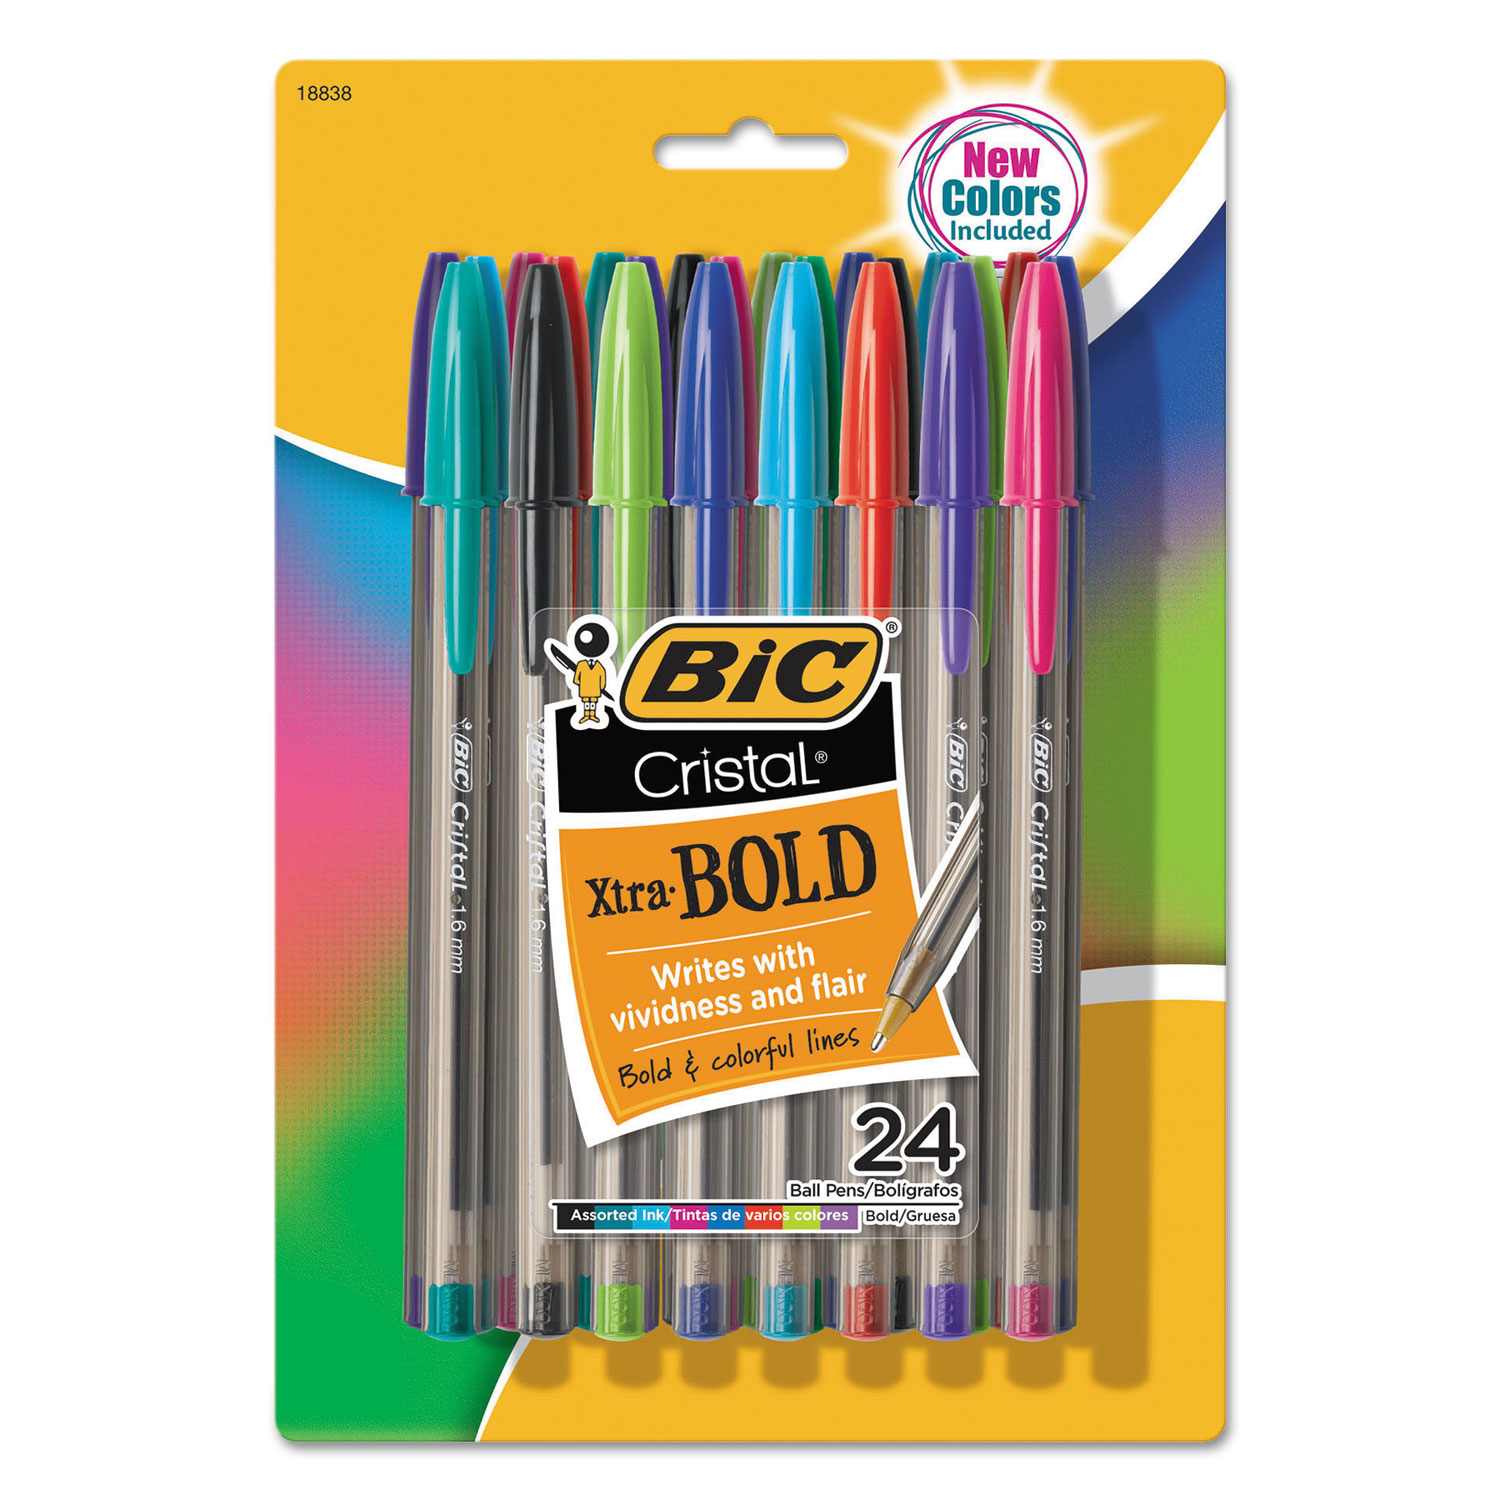 Cristal Xtra Bold Stick Ballpoint Pen, Bold 1.6mm, Assorted Ink/Barrel, 24/Pack